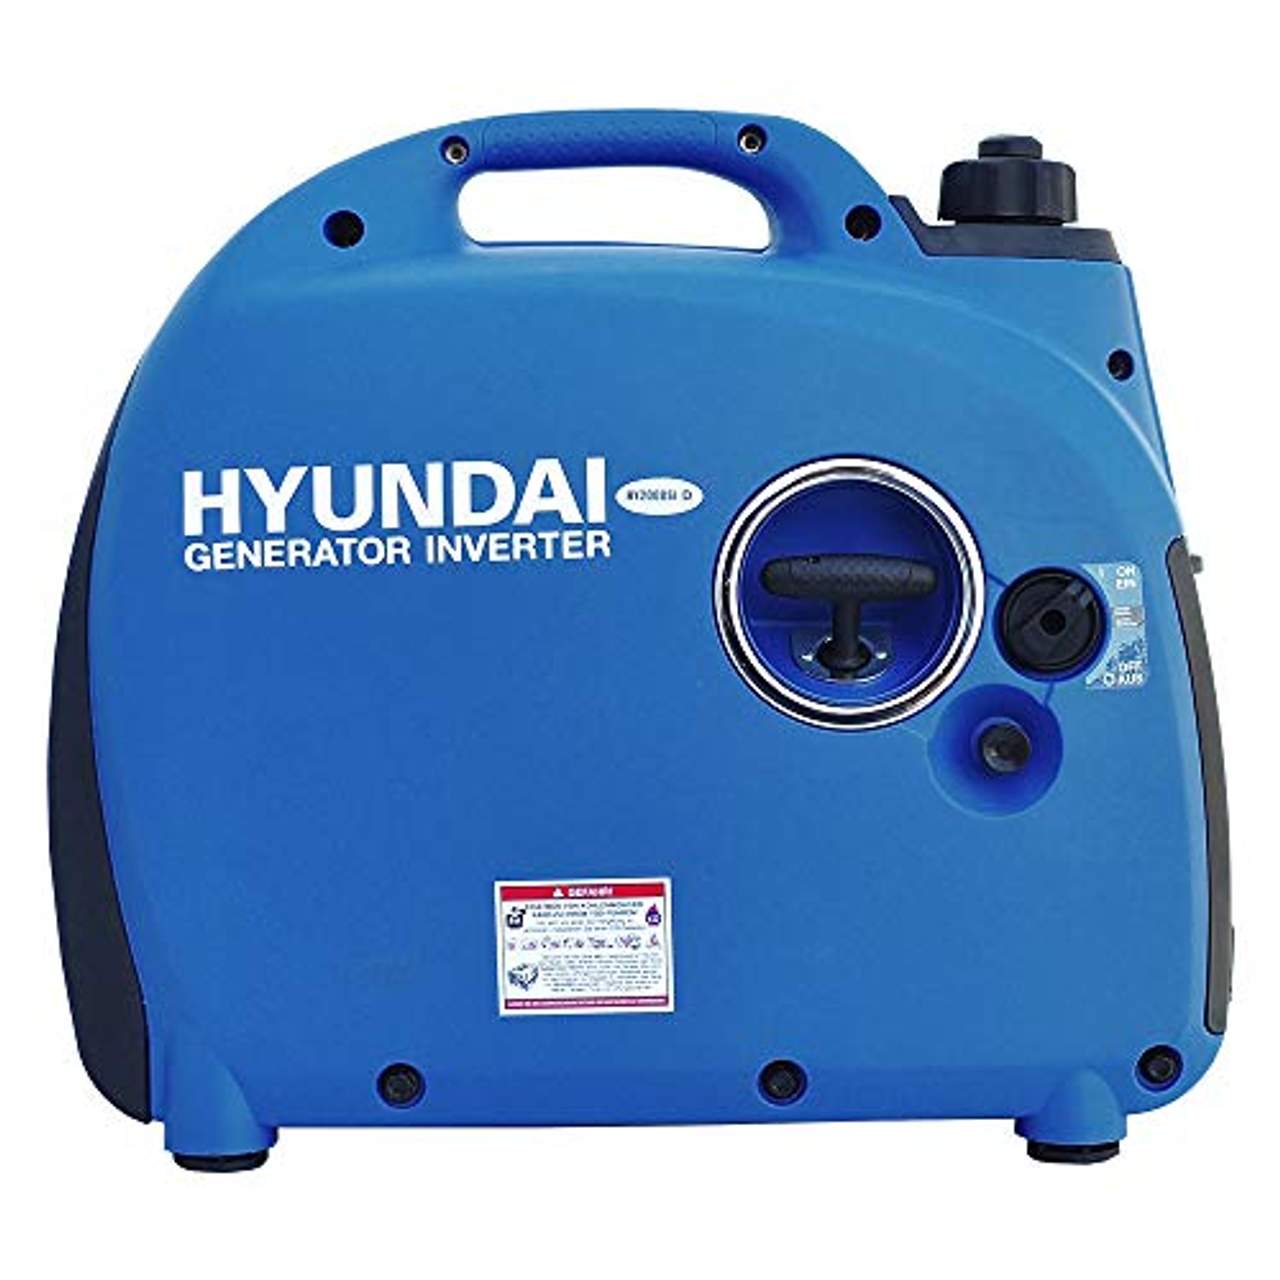 Hyundai Inverter-Generator HY2000Si D